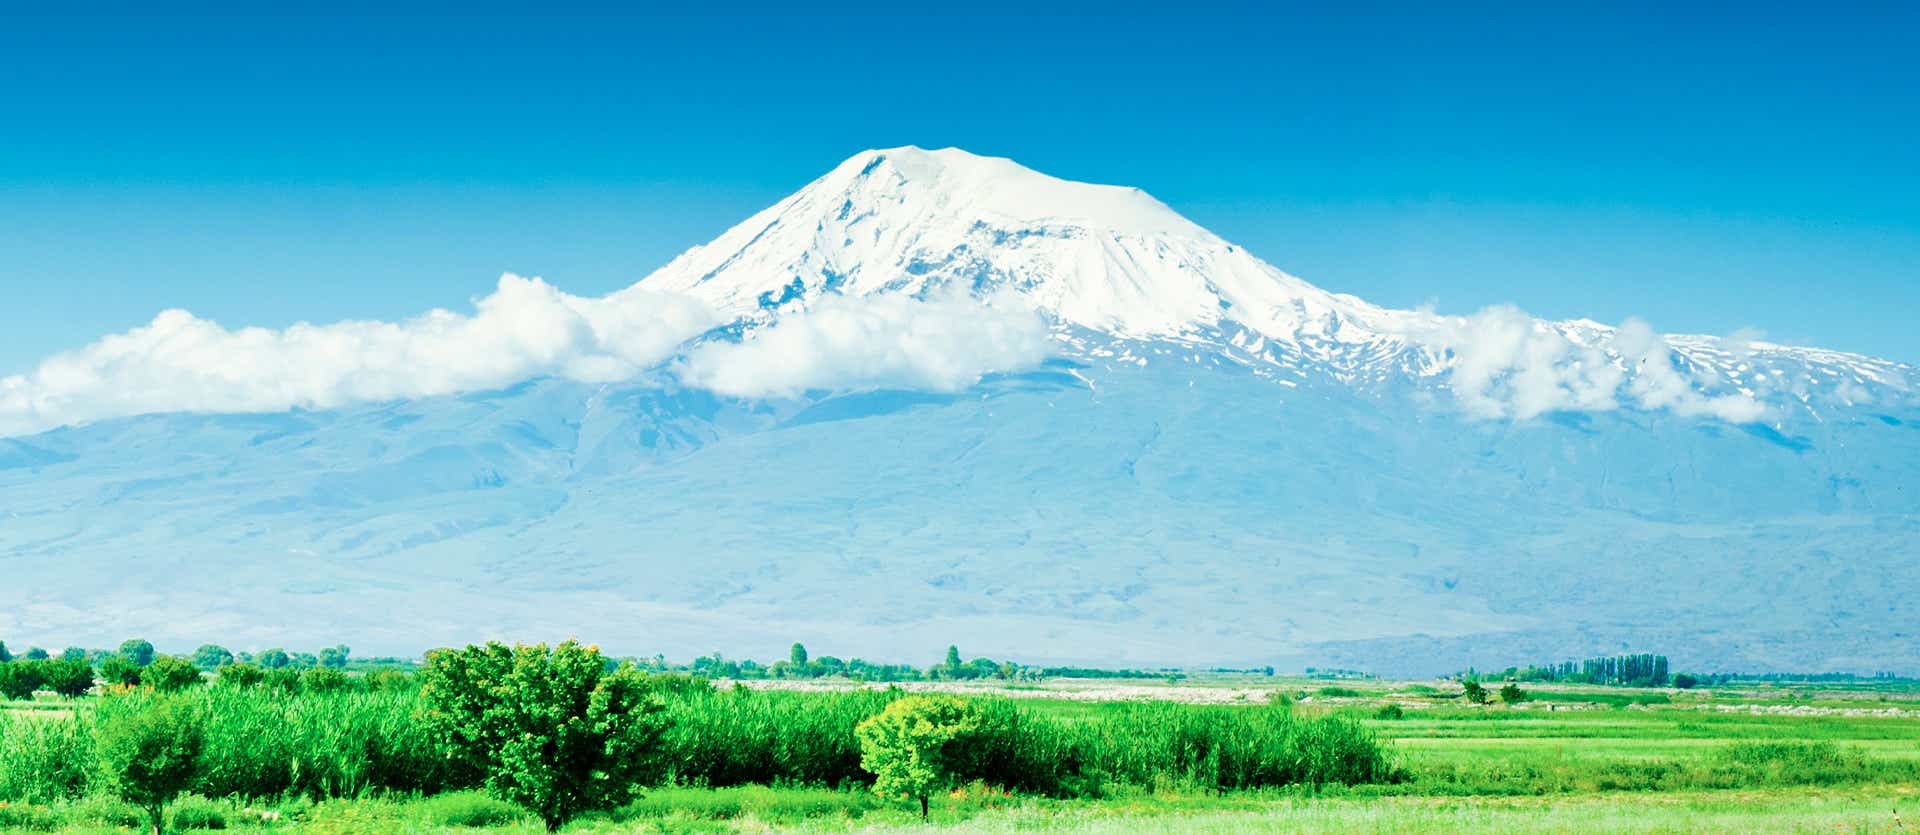 <span class="iconos separador"></span> View of Mount Ararat <span class="iconos separador"></span>